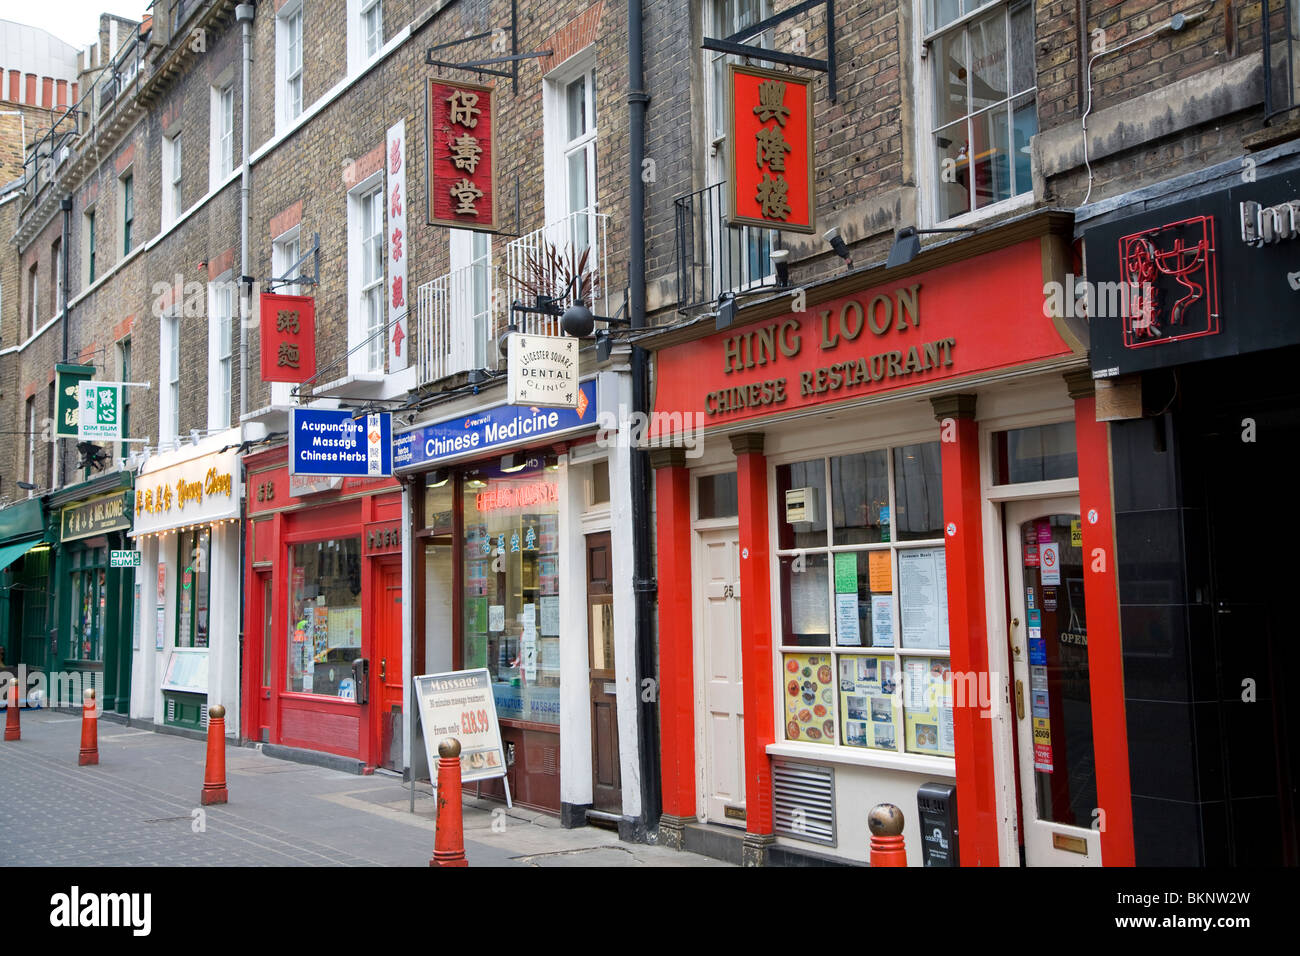 Chinese restaurants and shops, Chinatown, Soho, London, England Stock Photo